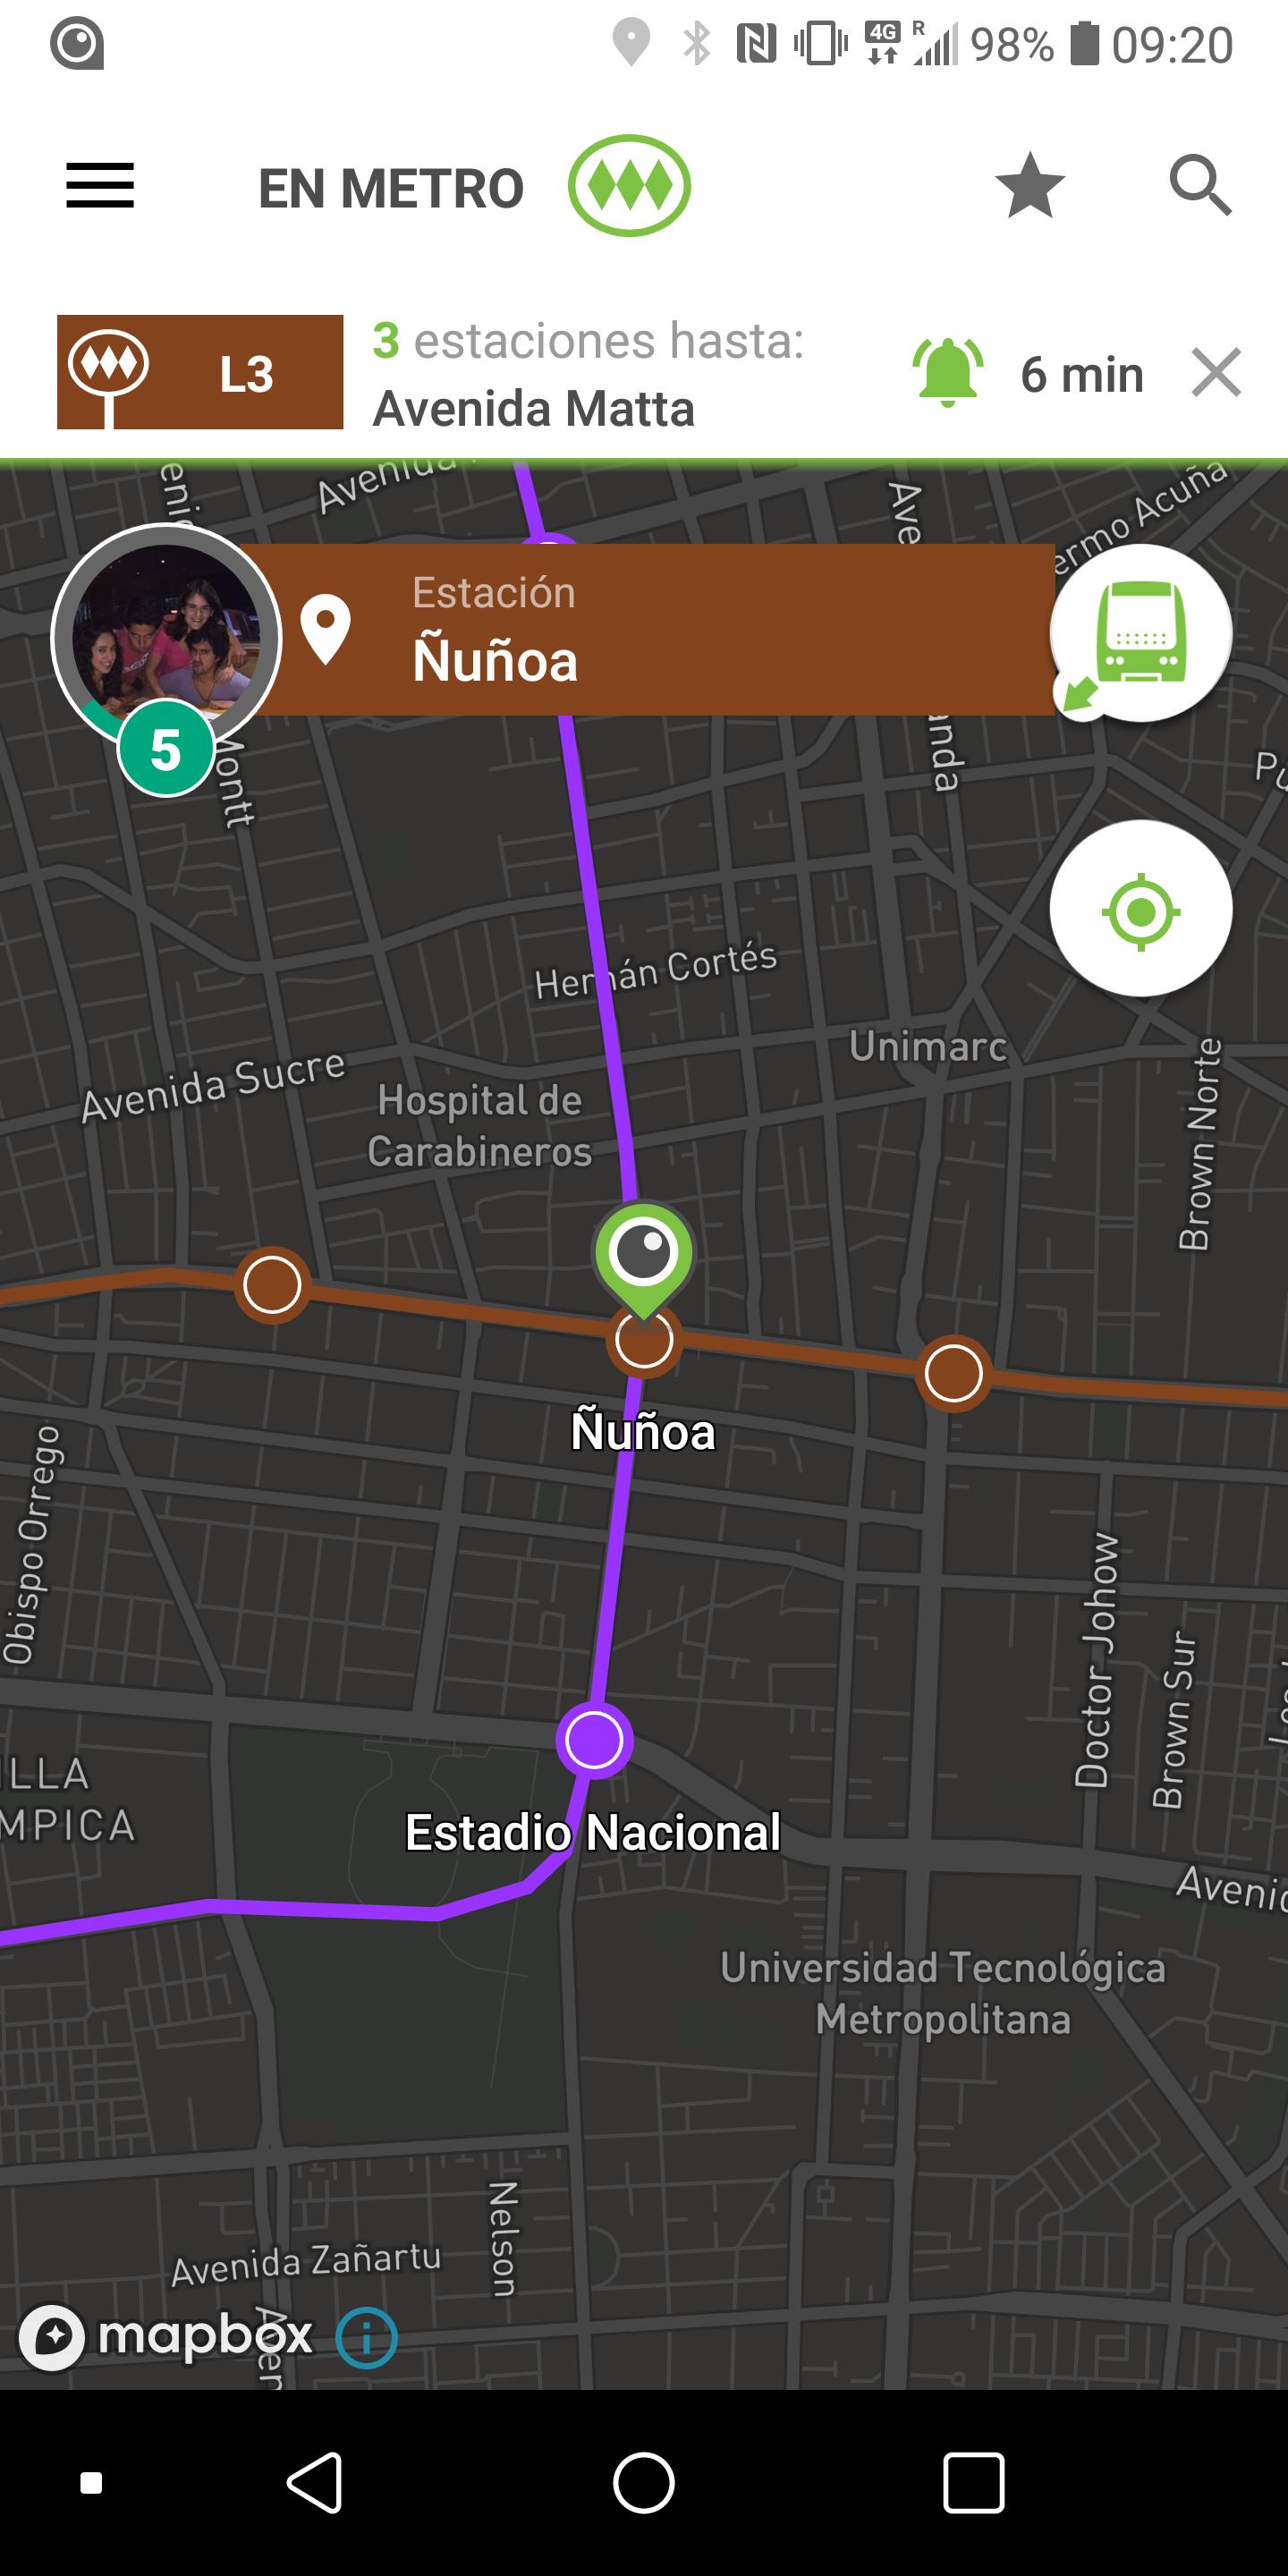 TranSapp Metro y buses de transantiago 3.6.2 Screenshot 3